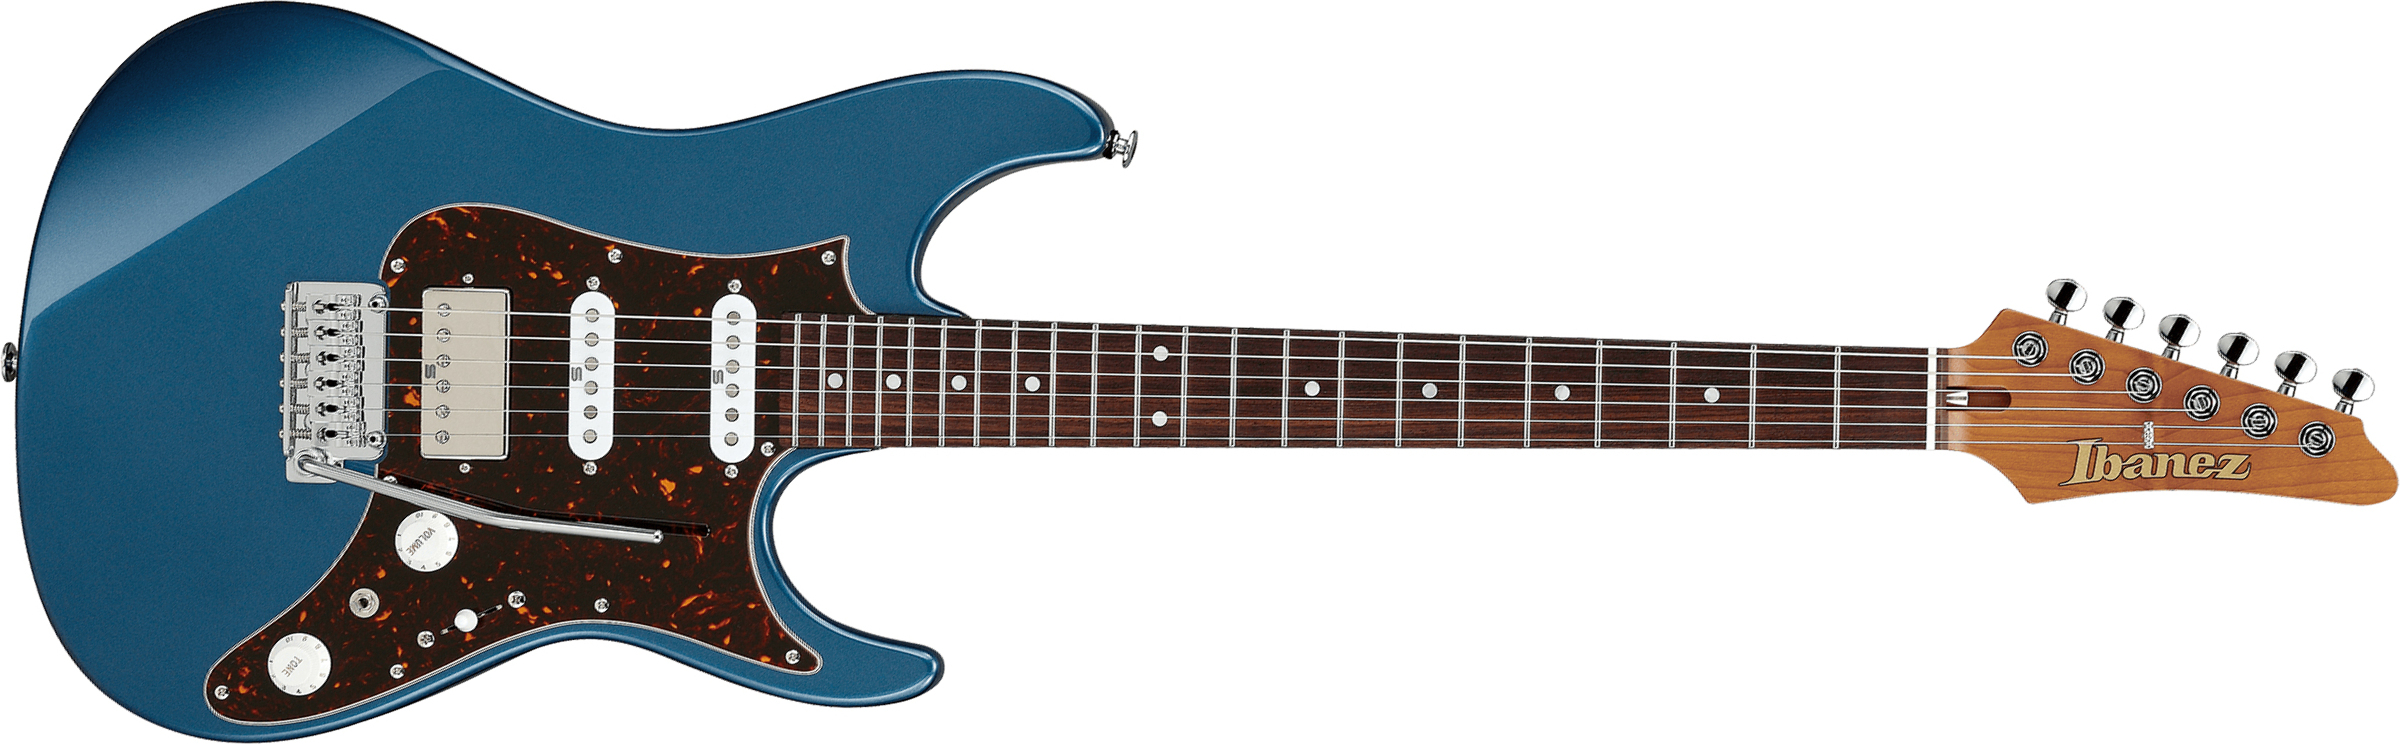 Ibanez Az2204n Pbm Prestige Jap Hss Seymour Duncan Trem Rw - Prussian Blue Metallic - E-Gitarre in Str-Form - Main picture